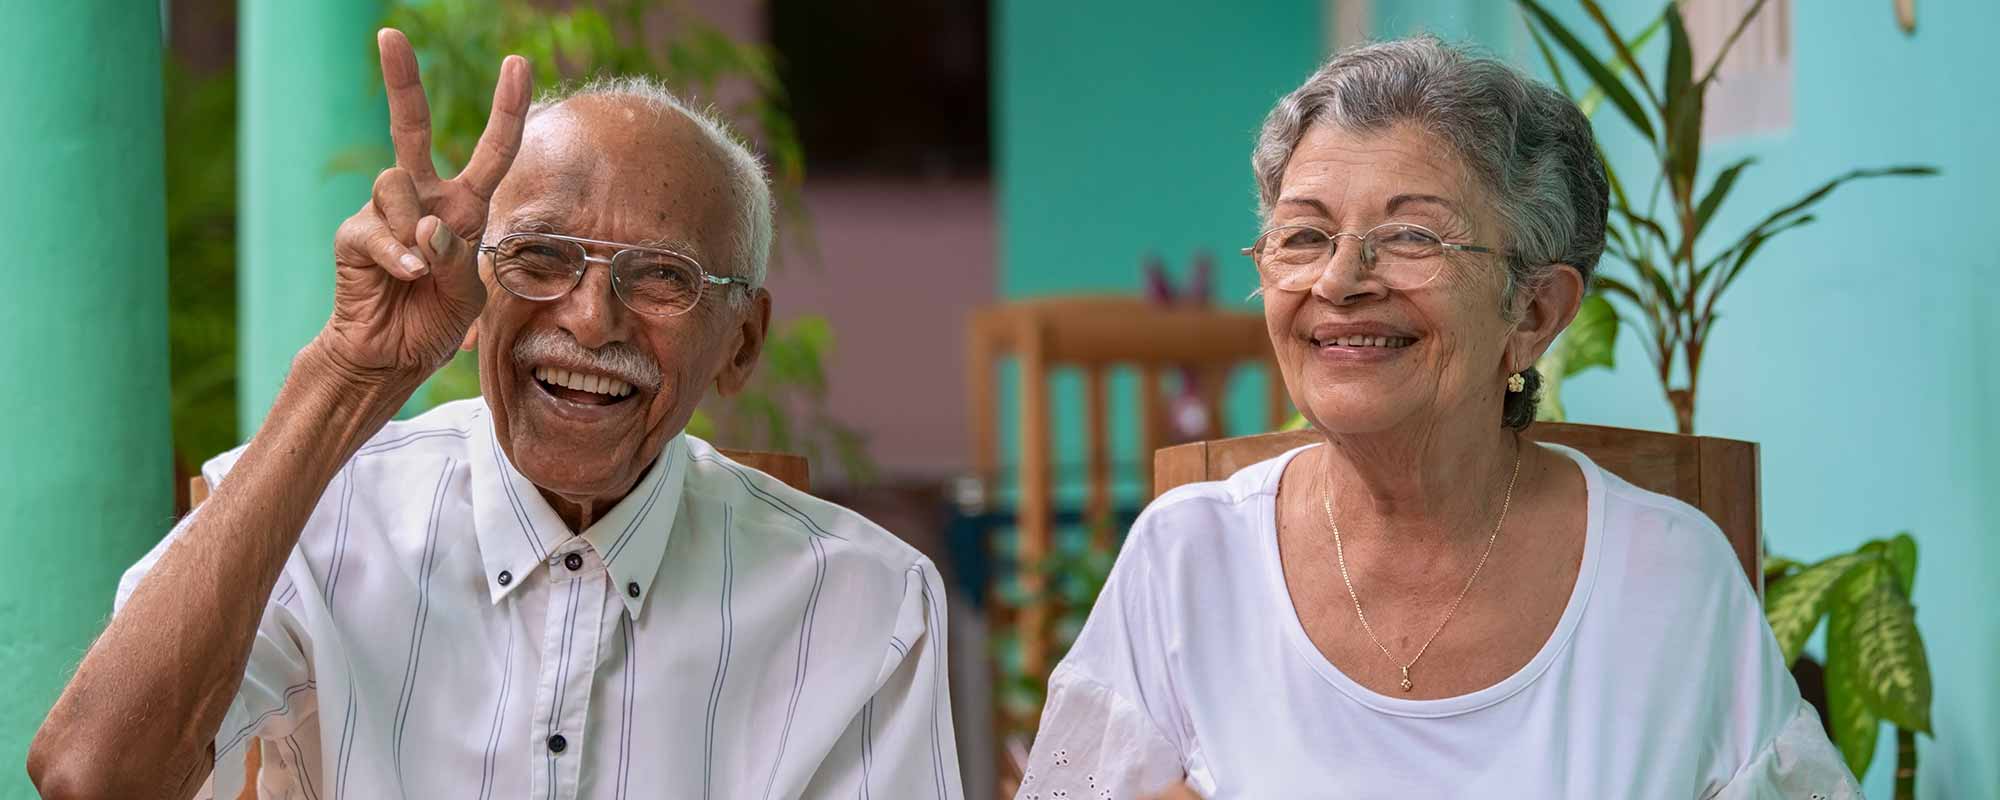 Elderly Hispanic couple